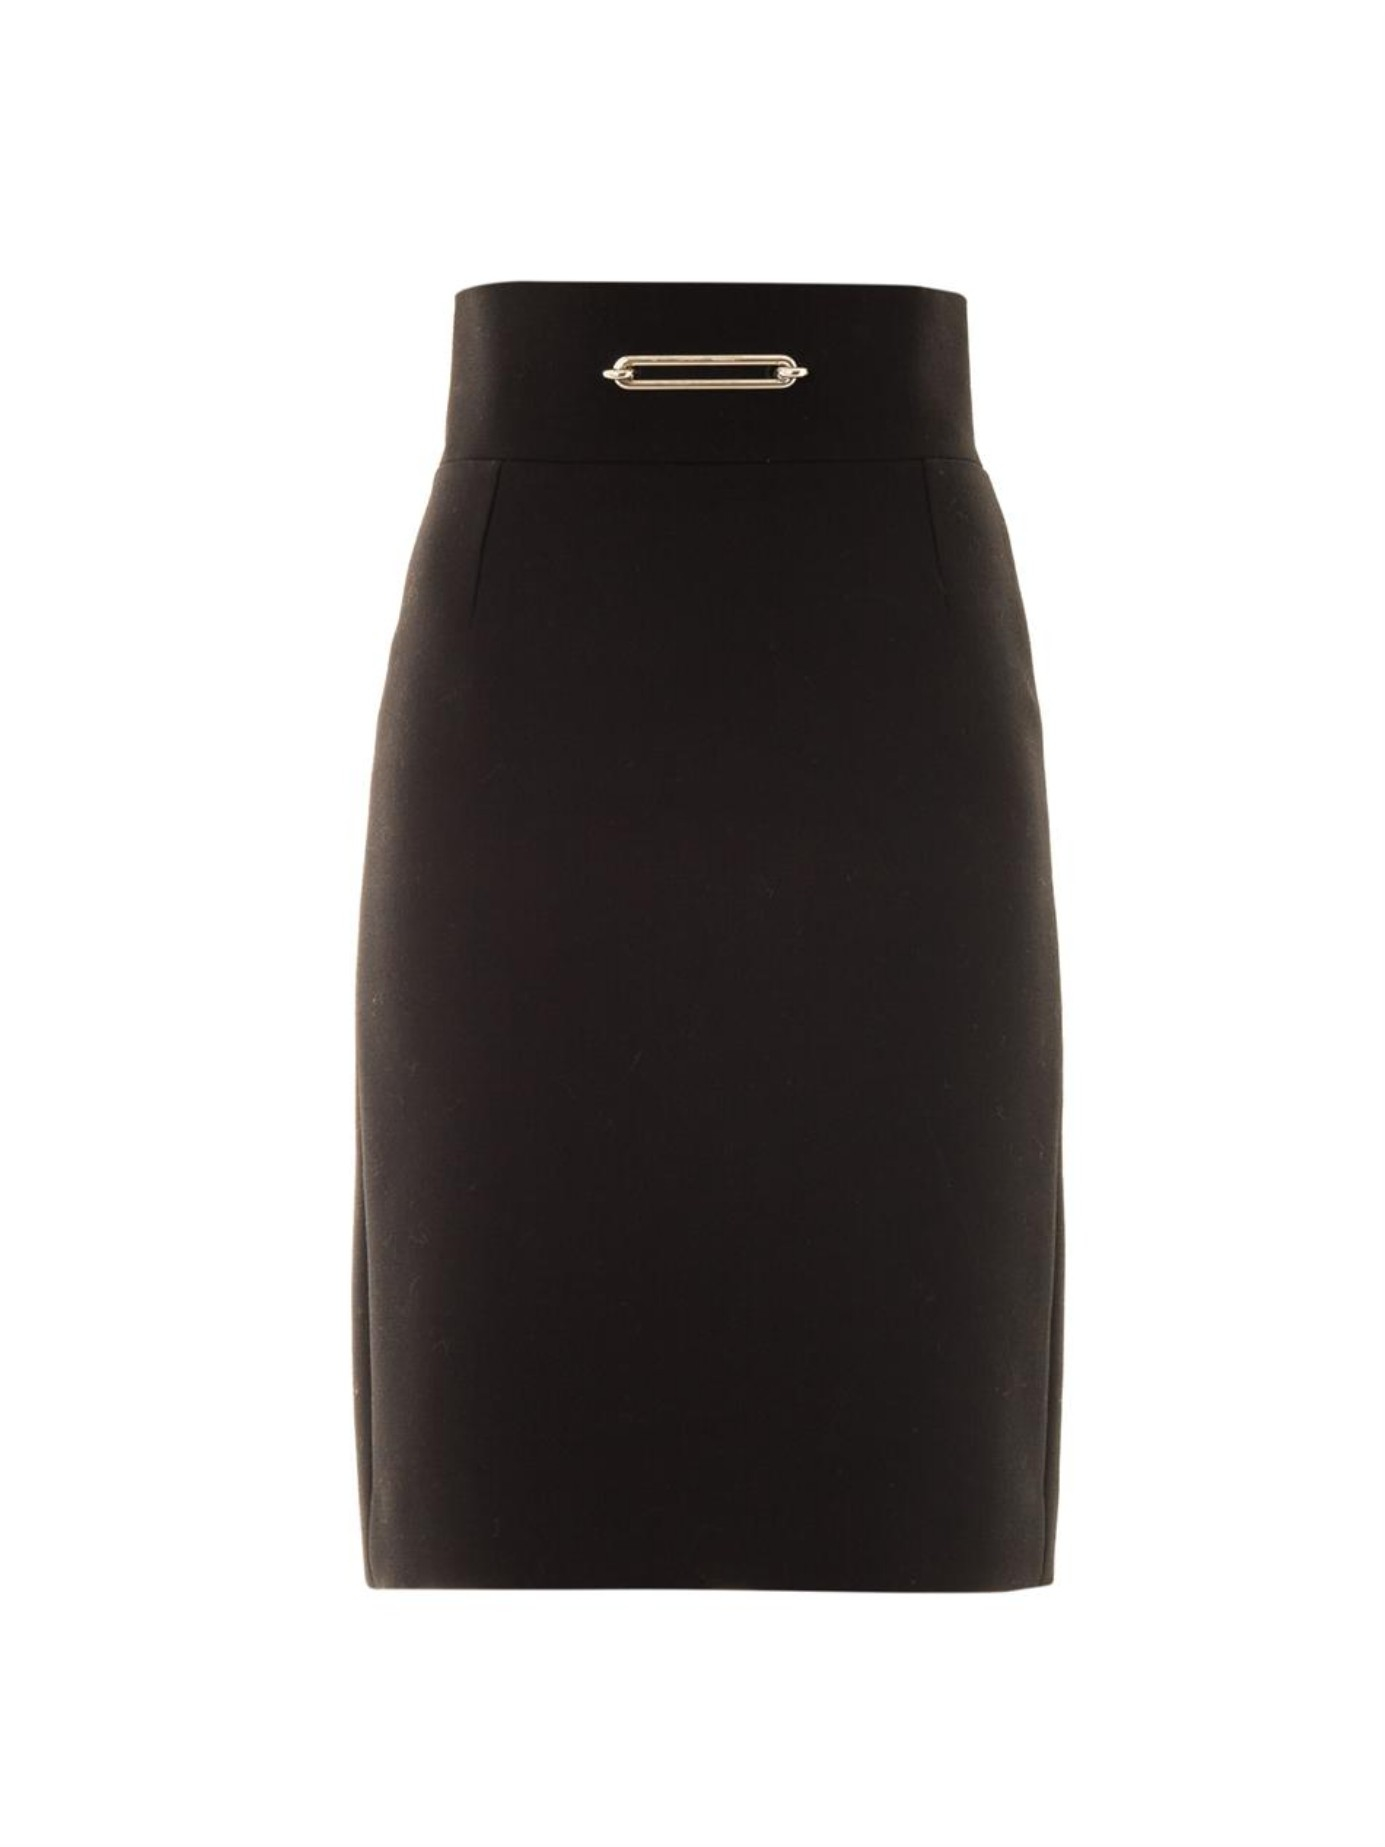 Balenciaga Wool Pencil Skirt in Black - Lyst